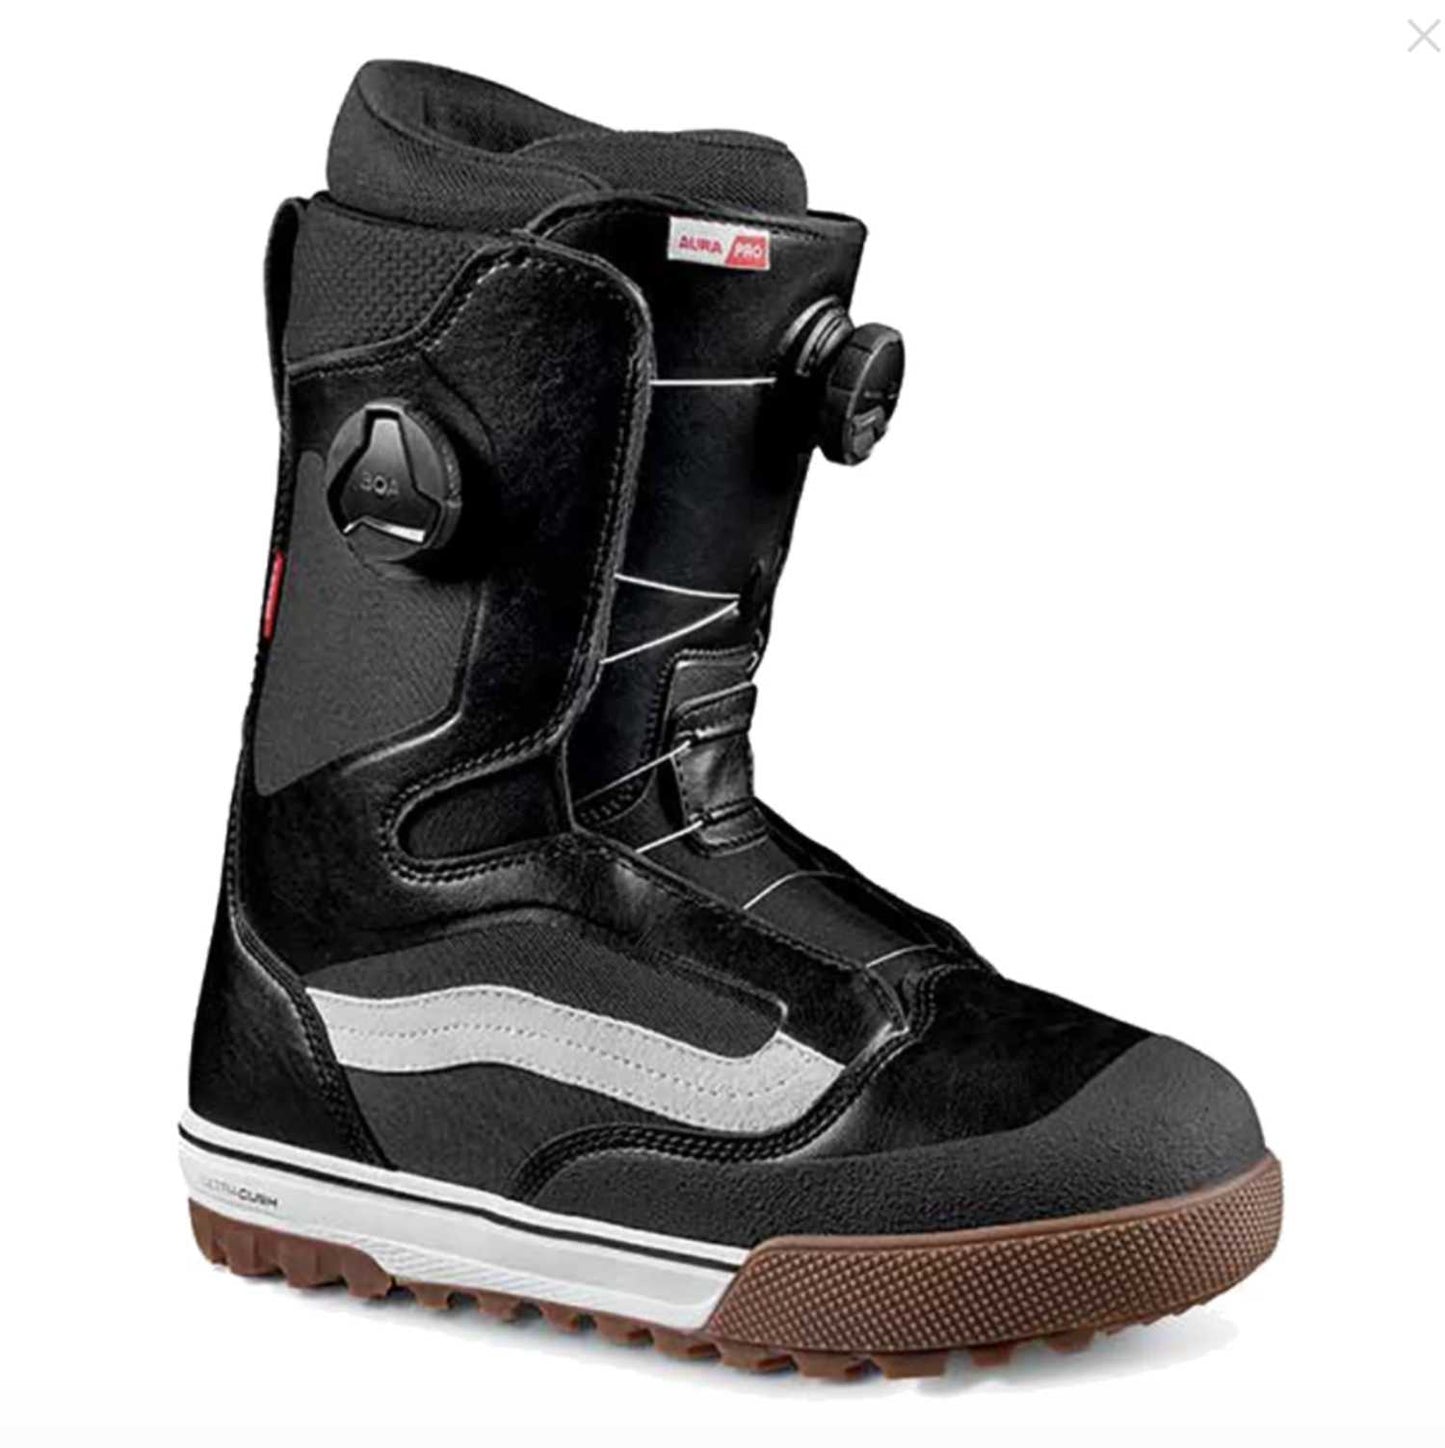 Vans Aura Pro Snowboard Boots - Blk/Wht VANS